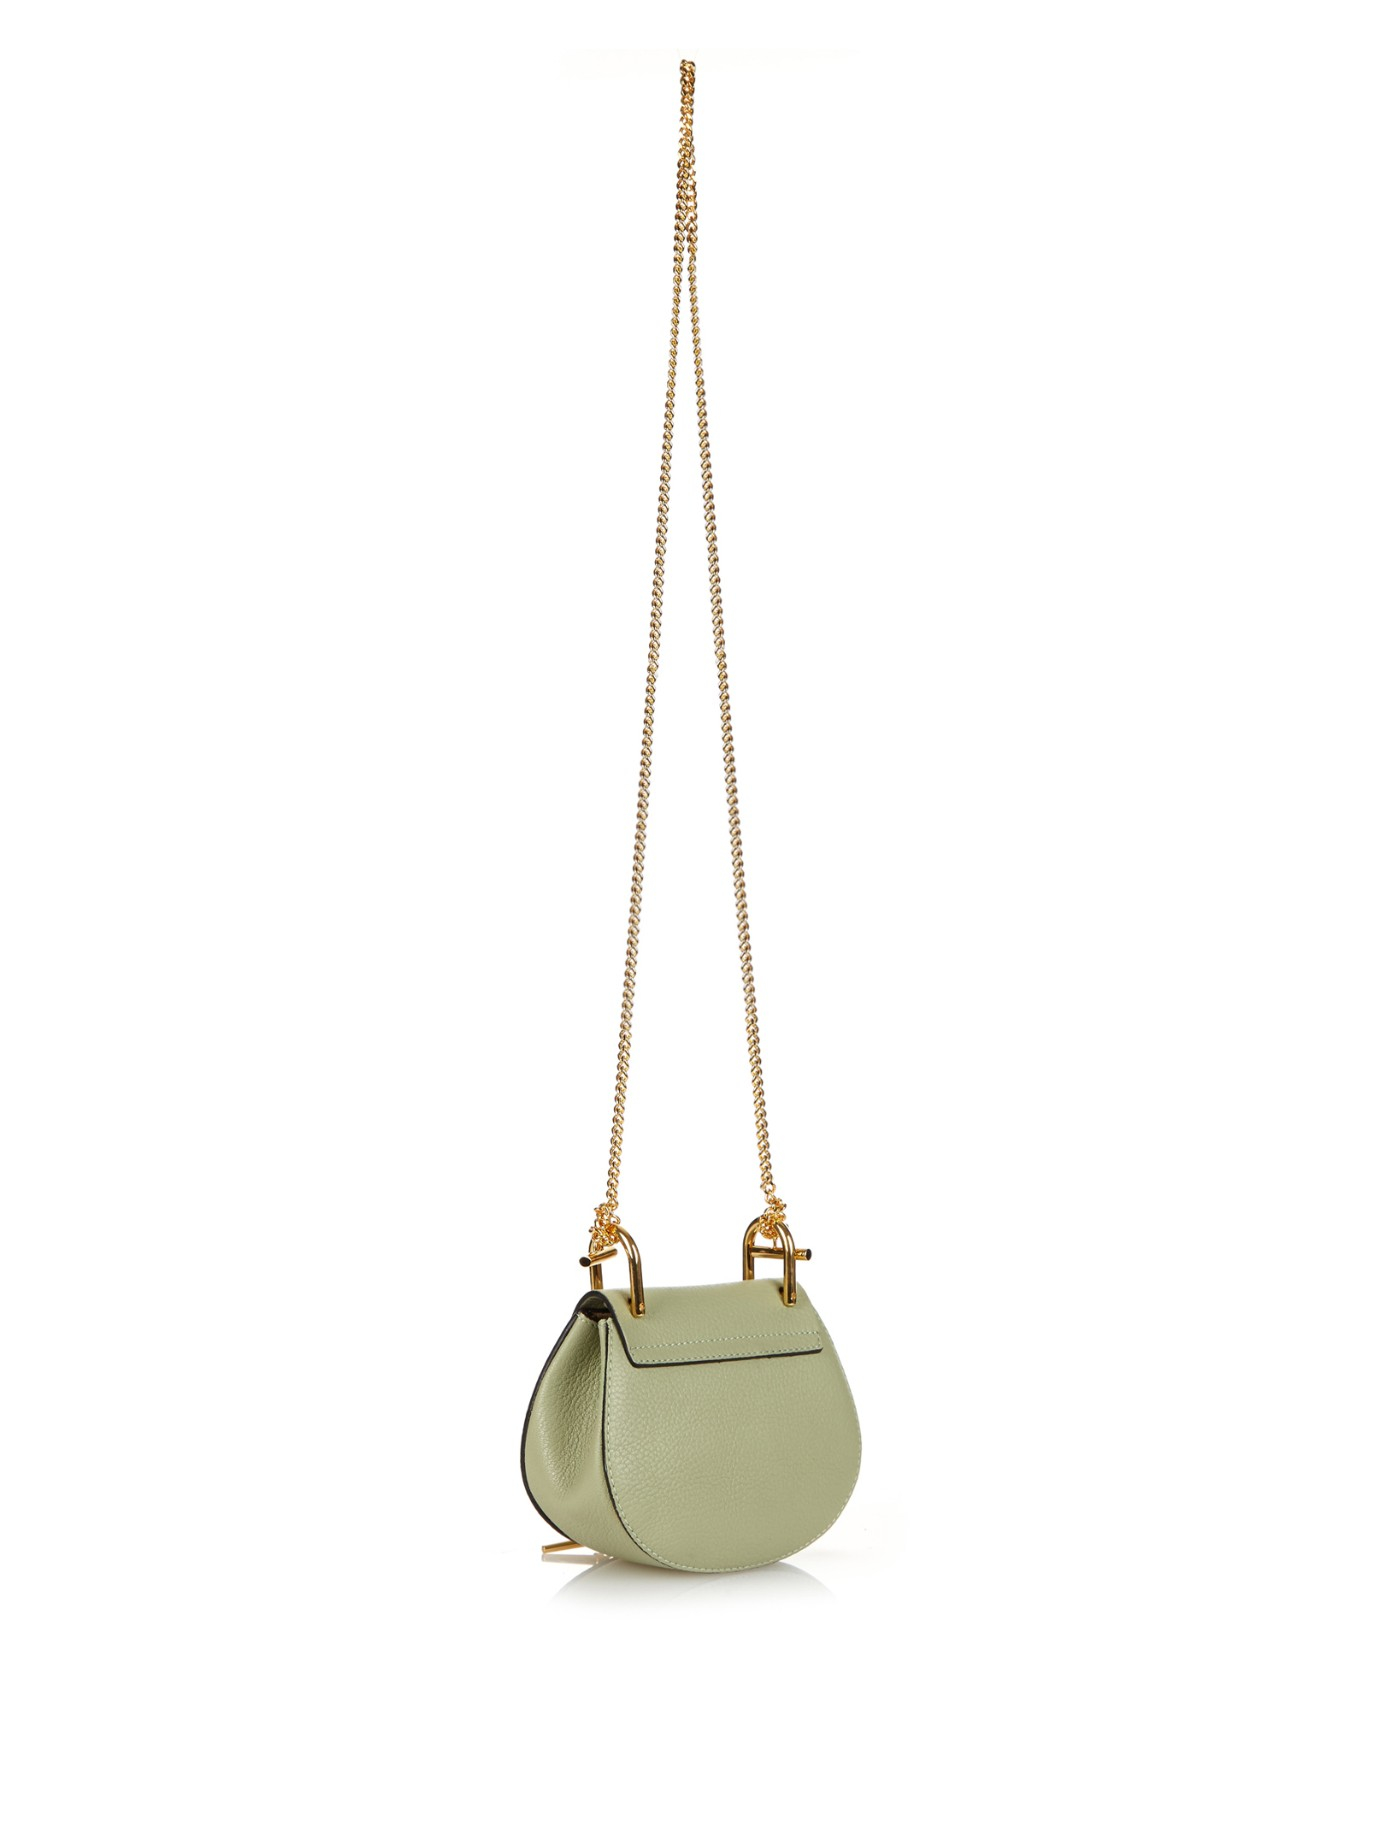 chloe cheap handbags - Chlo Drew Nano Leather Cross-body Bag in Green (LIGHT GREEN) | Lyst